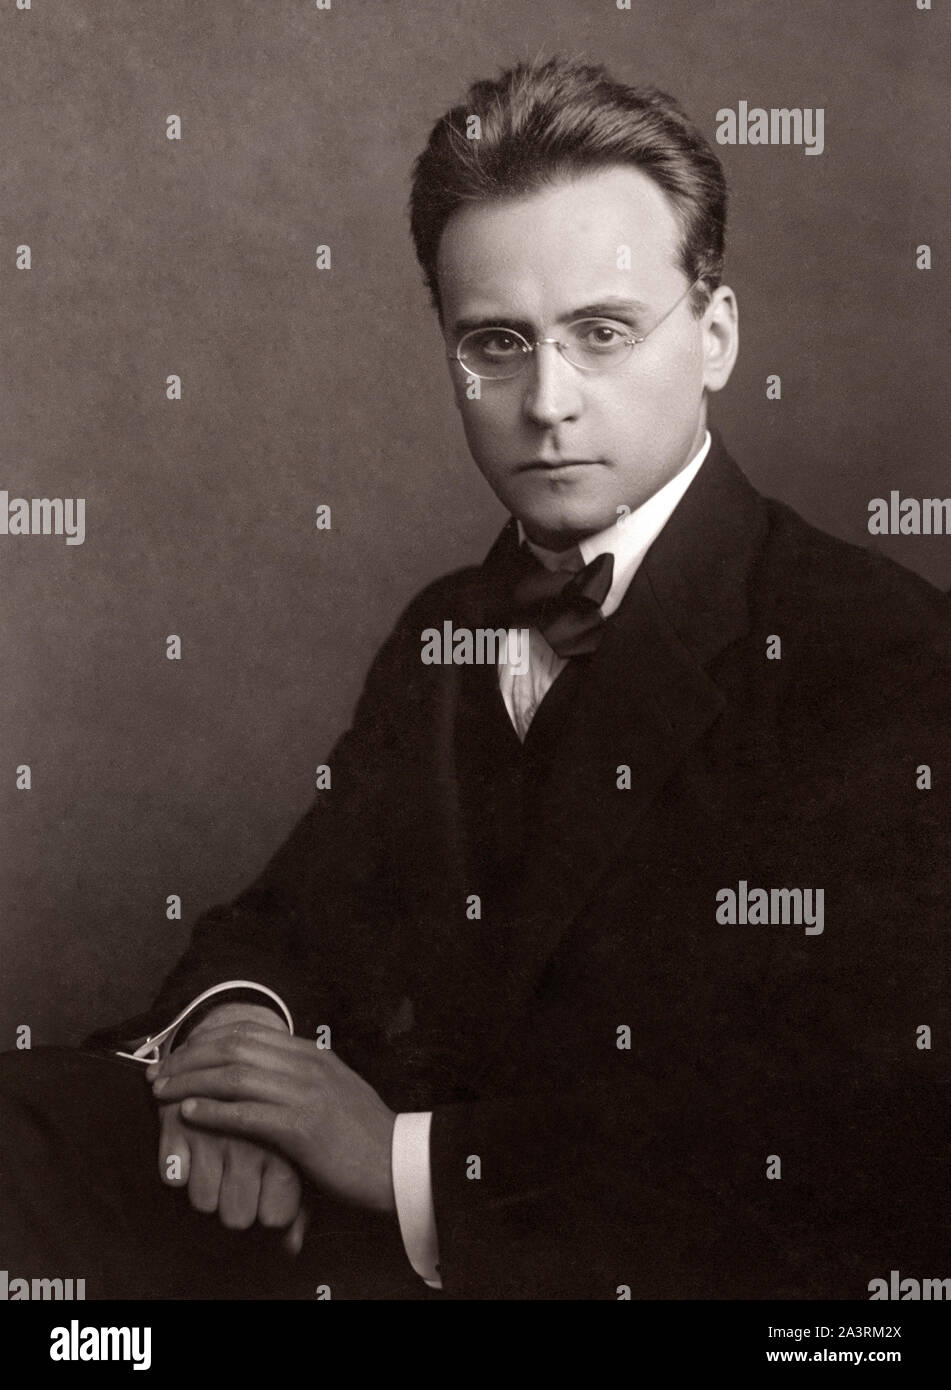 Anton Friedrich Wilhelm von Webern (1883 - 1945) era un compositore austriaco e conduttore. Foto Stock